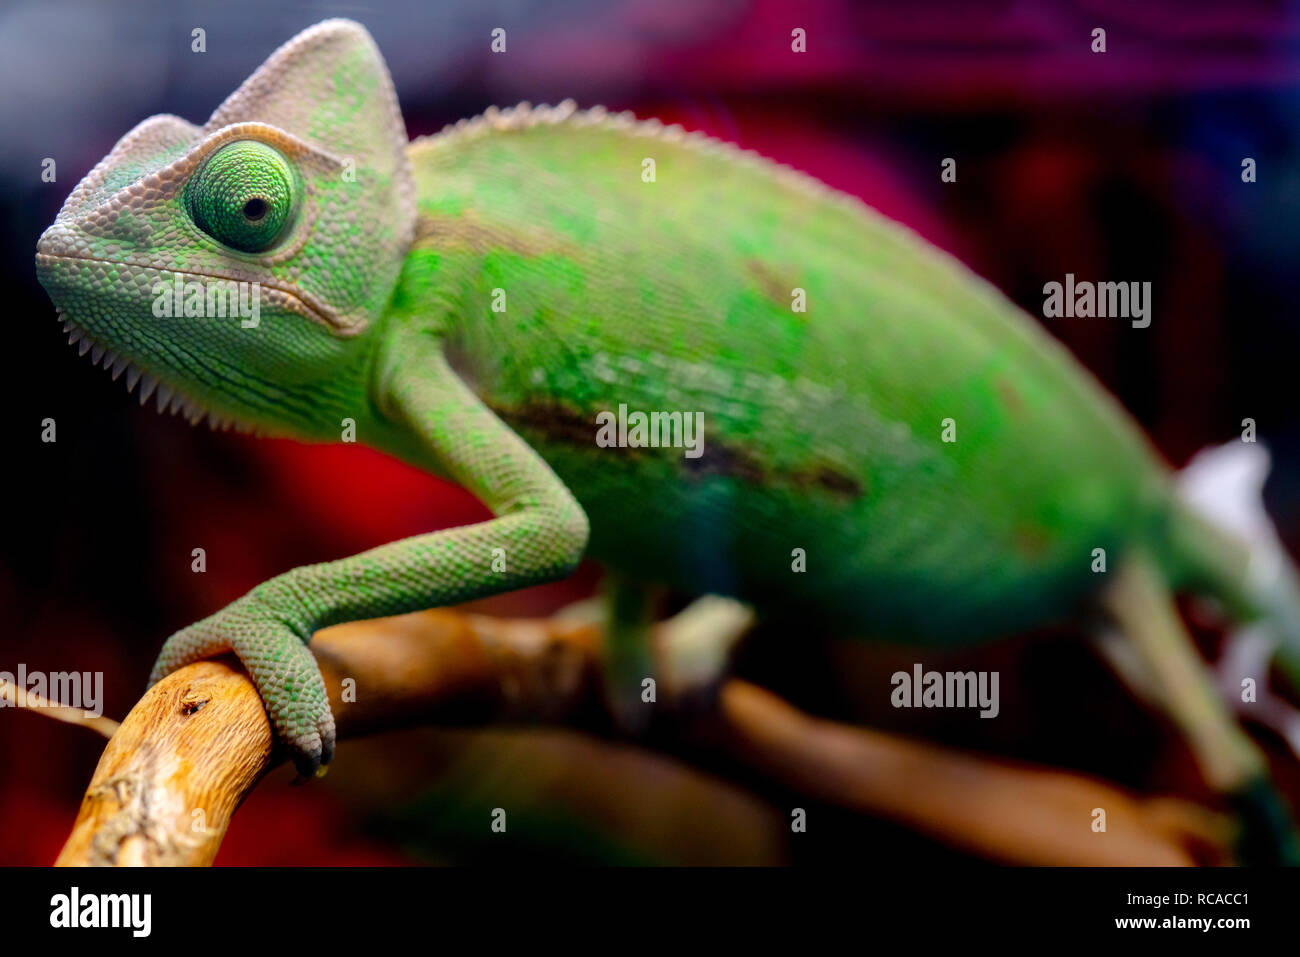 Green chameleon on the branch. Stock Photo